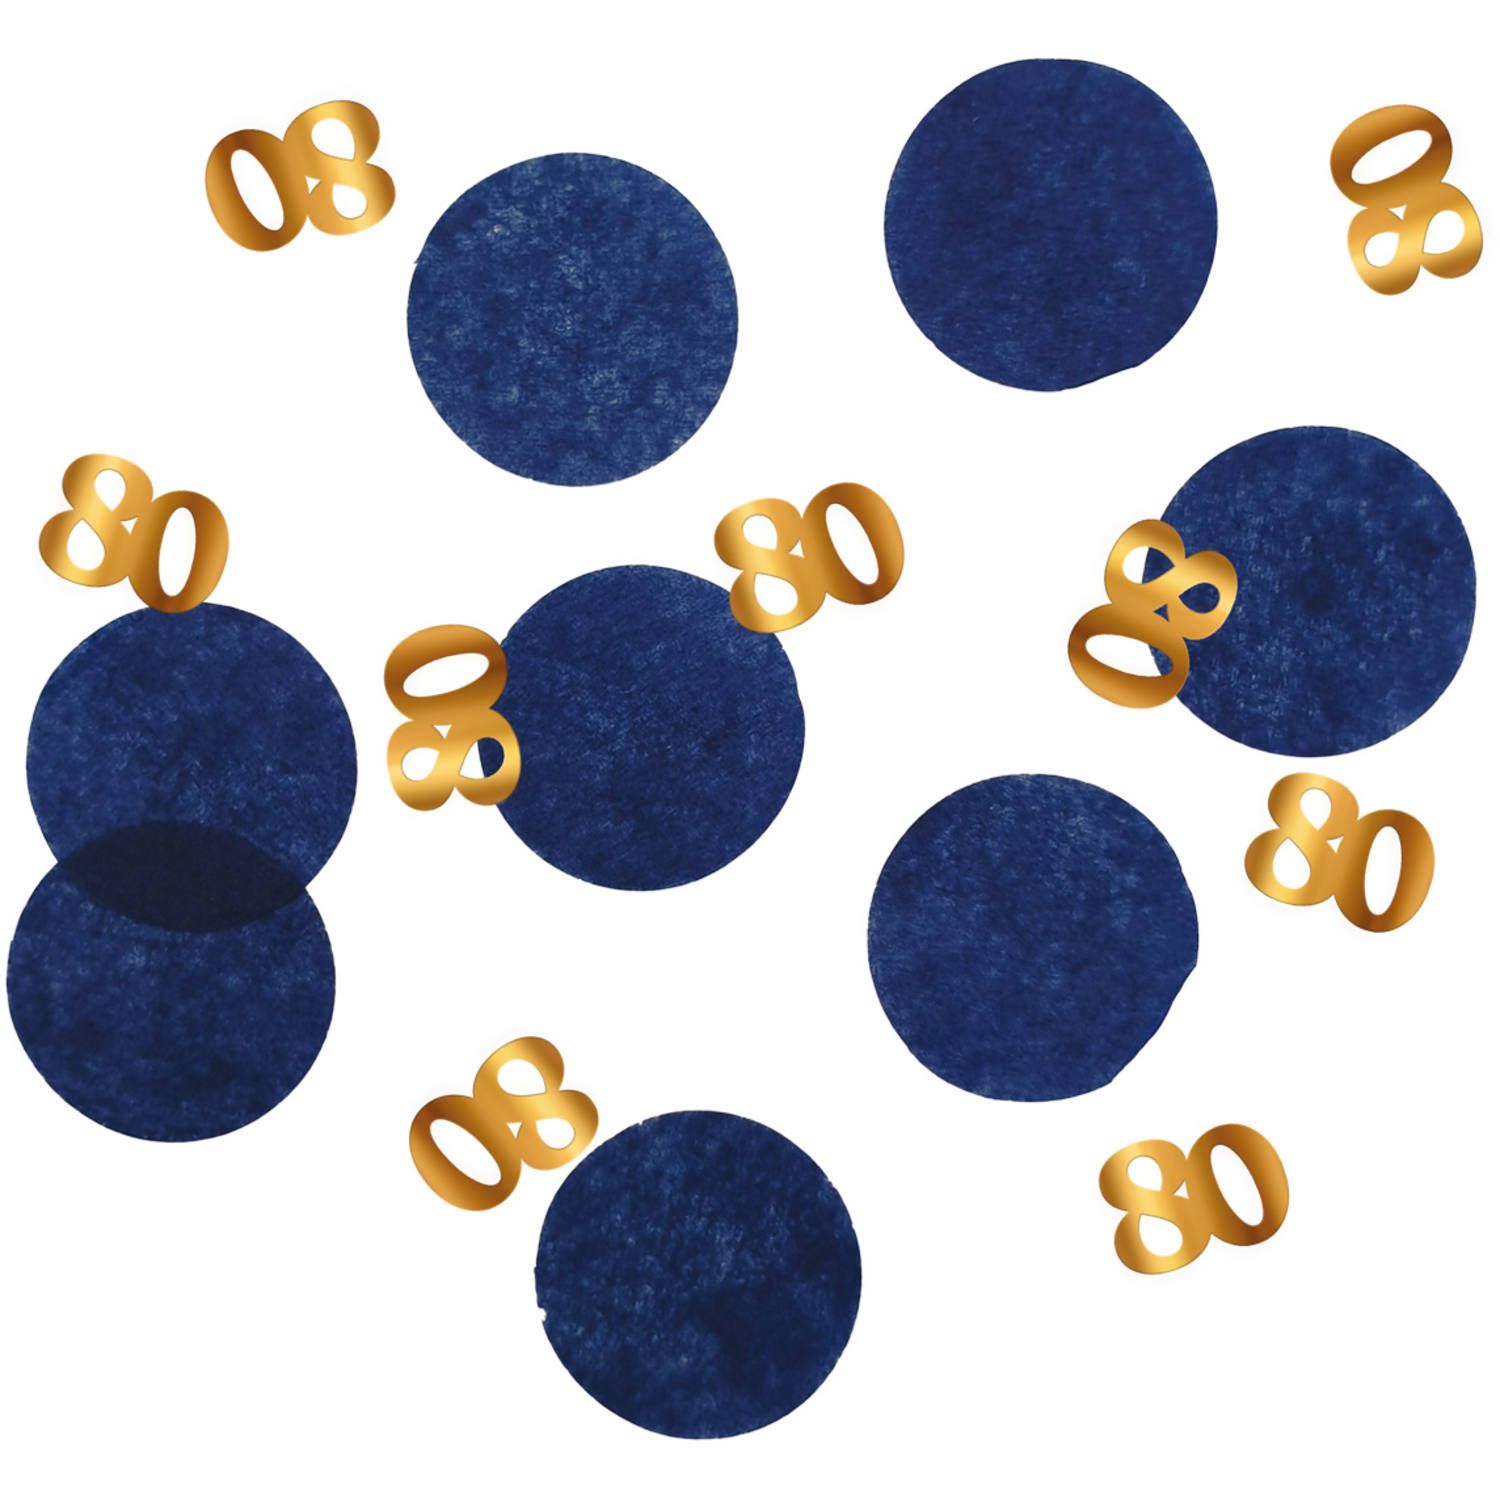 Feest confetti elegant true blue 80 jaar